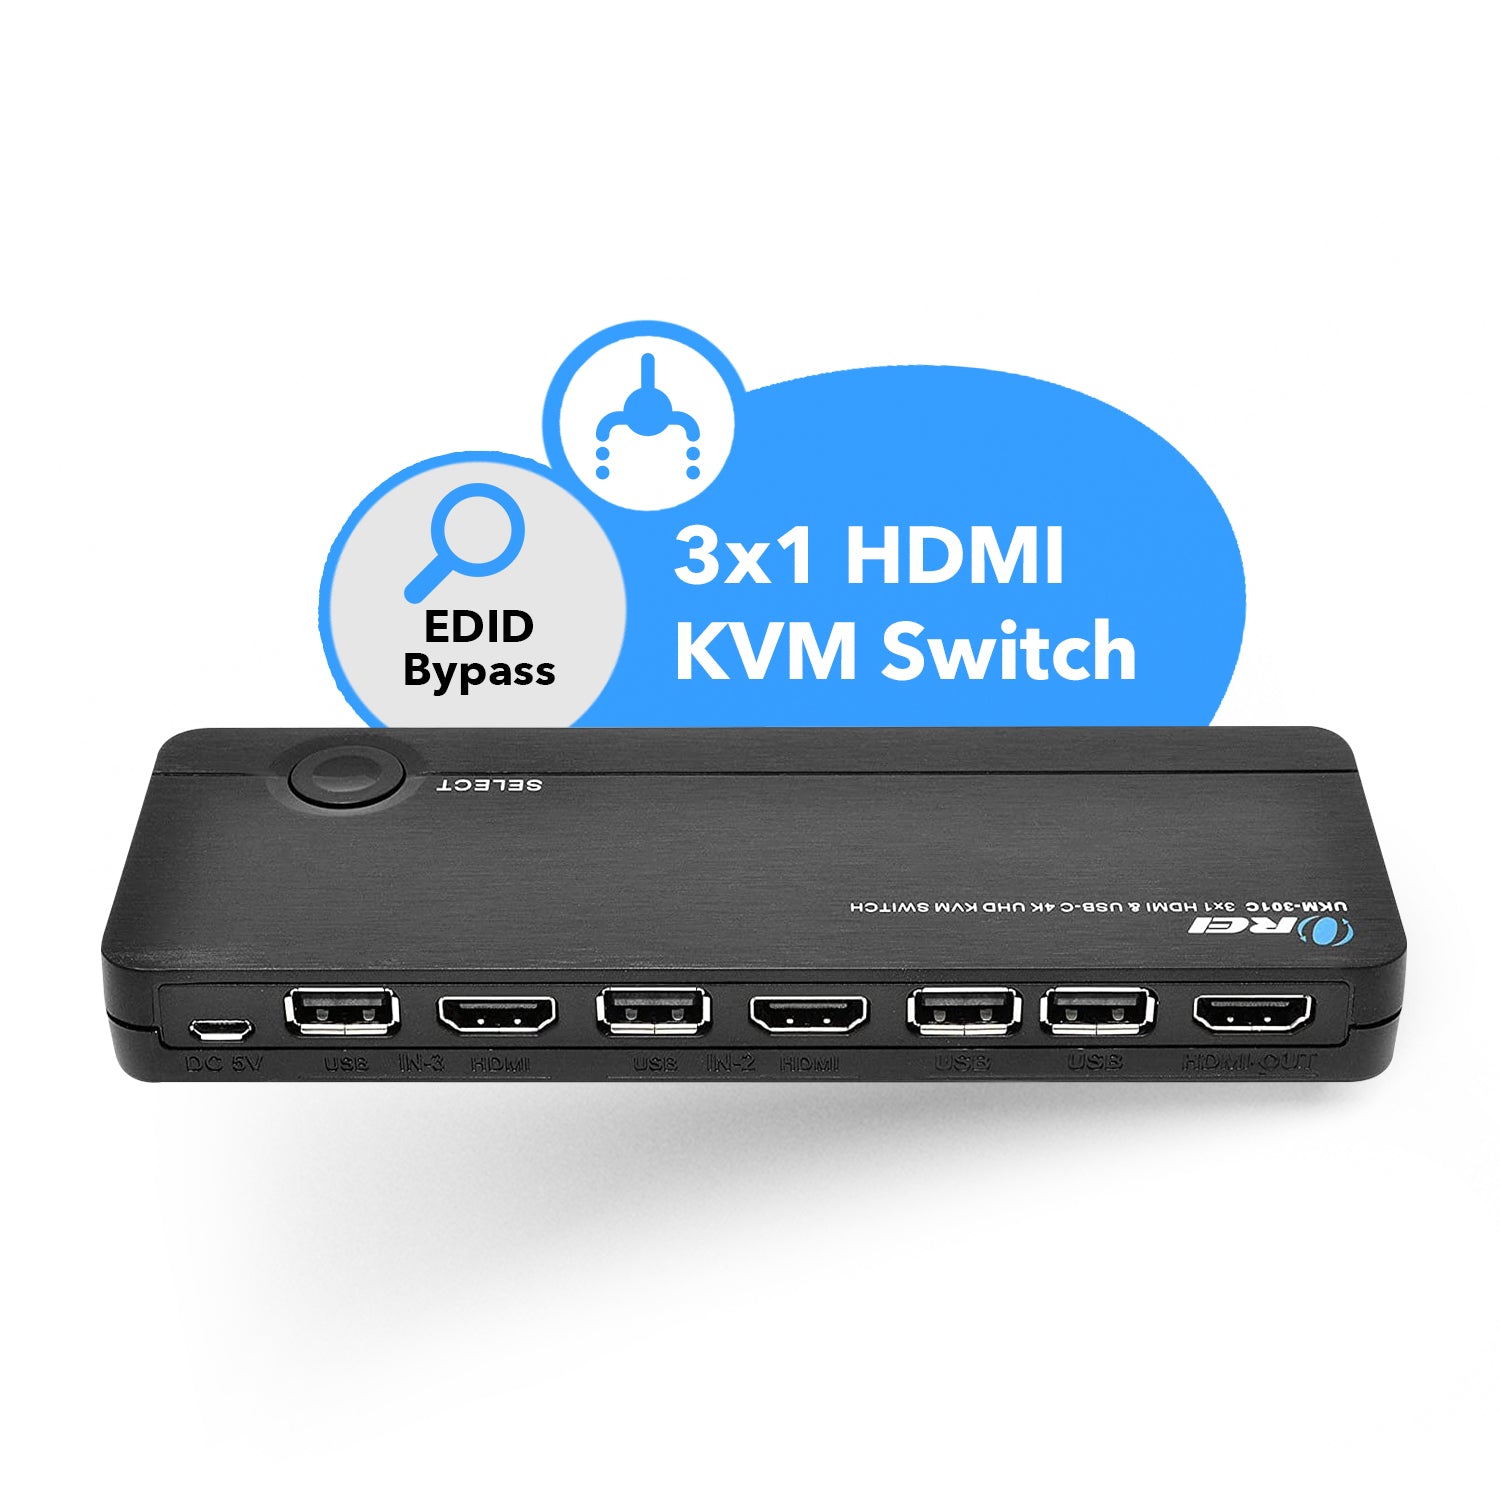 hdmi switch with KVM